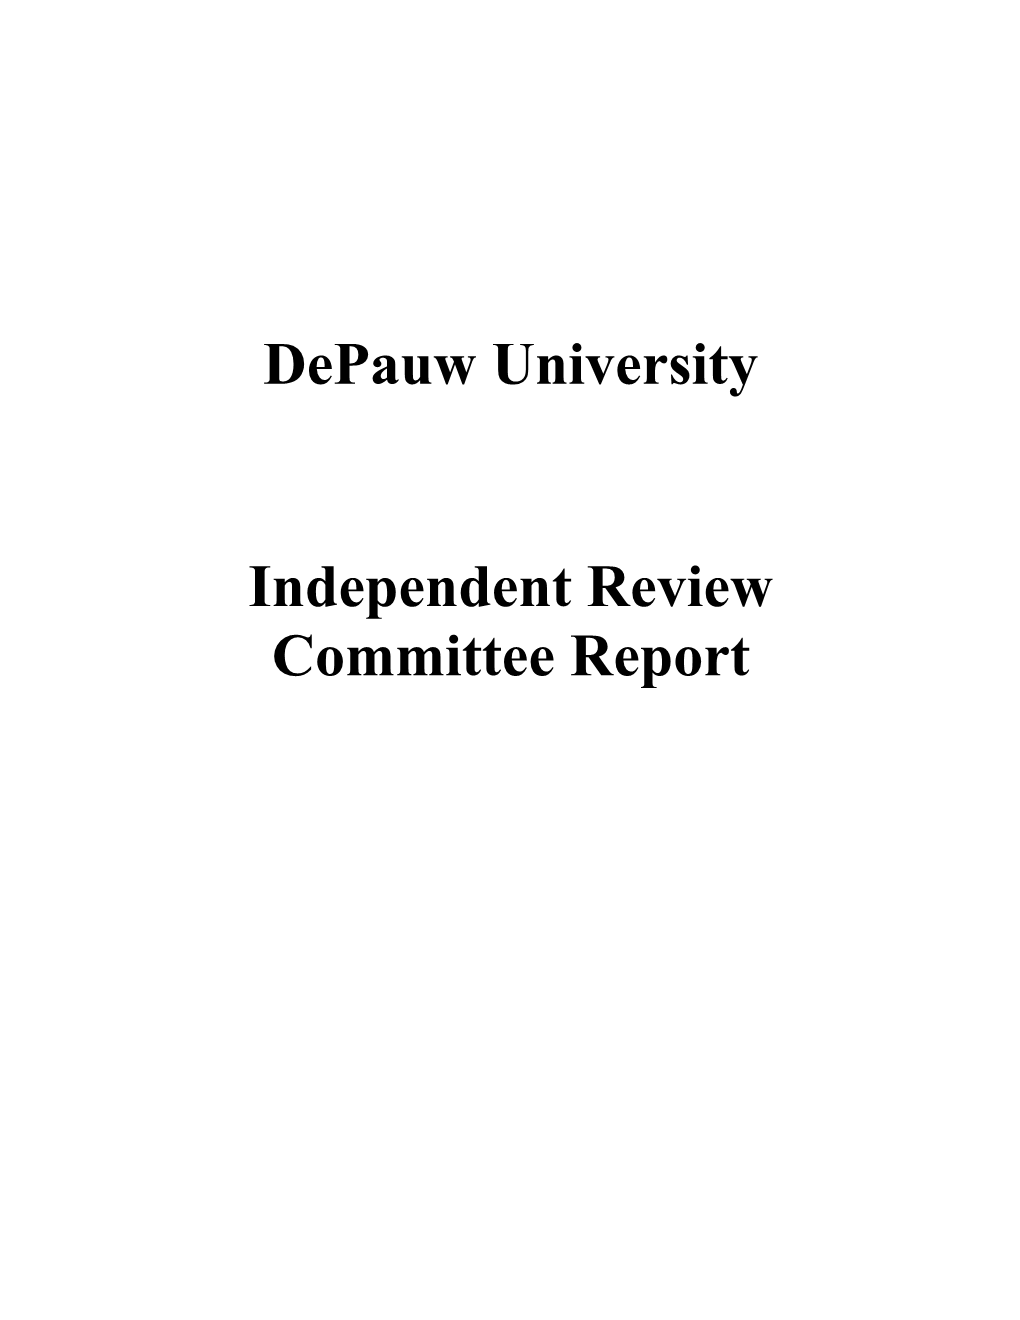 Depauw University Independent Review Committee Report